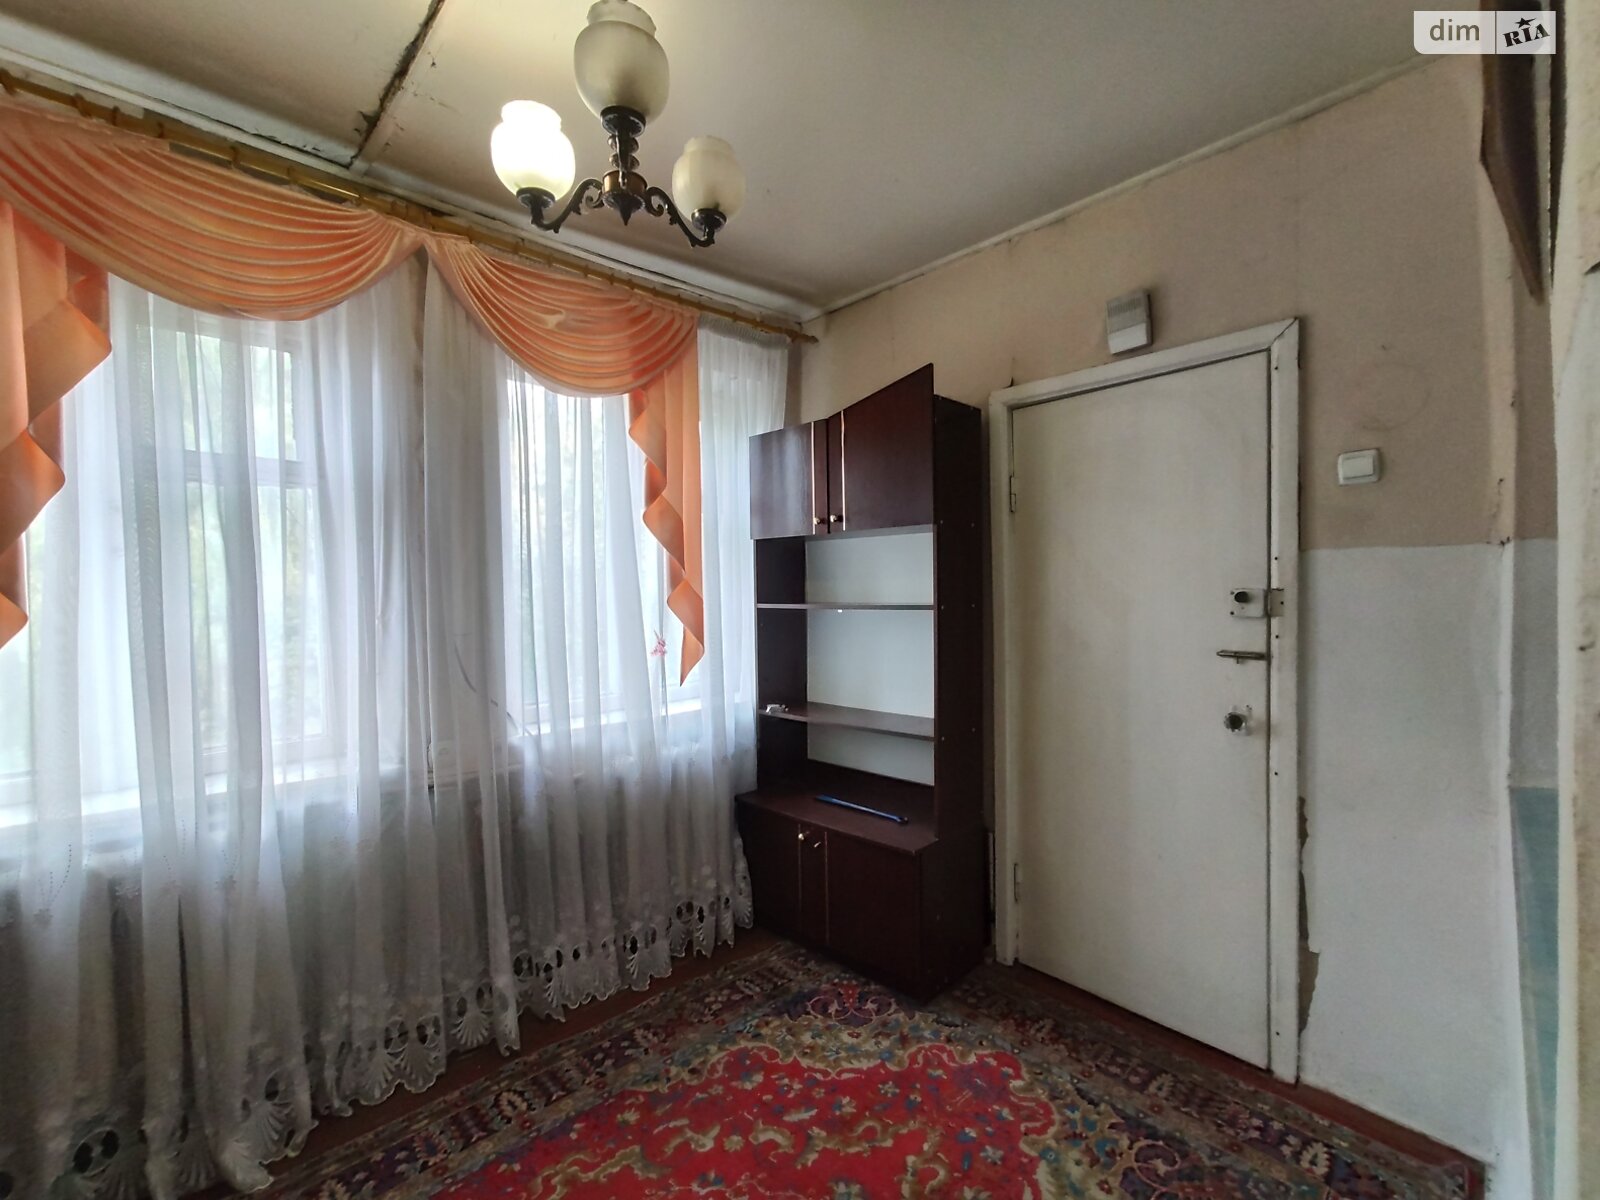 Продажа части дома в Виннице, улица Ивана Богуна, район Кумбары, 4 комнаты фото 1